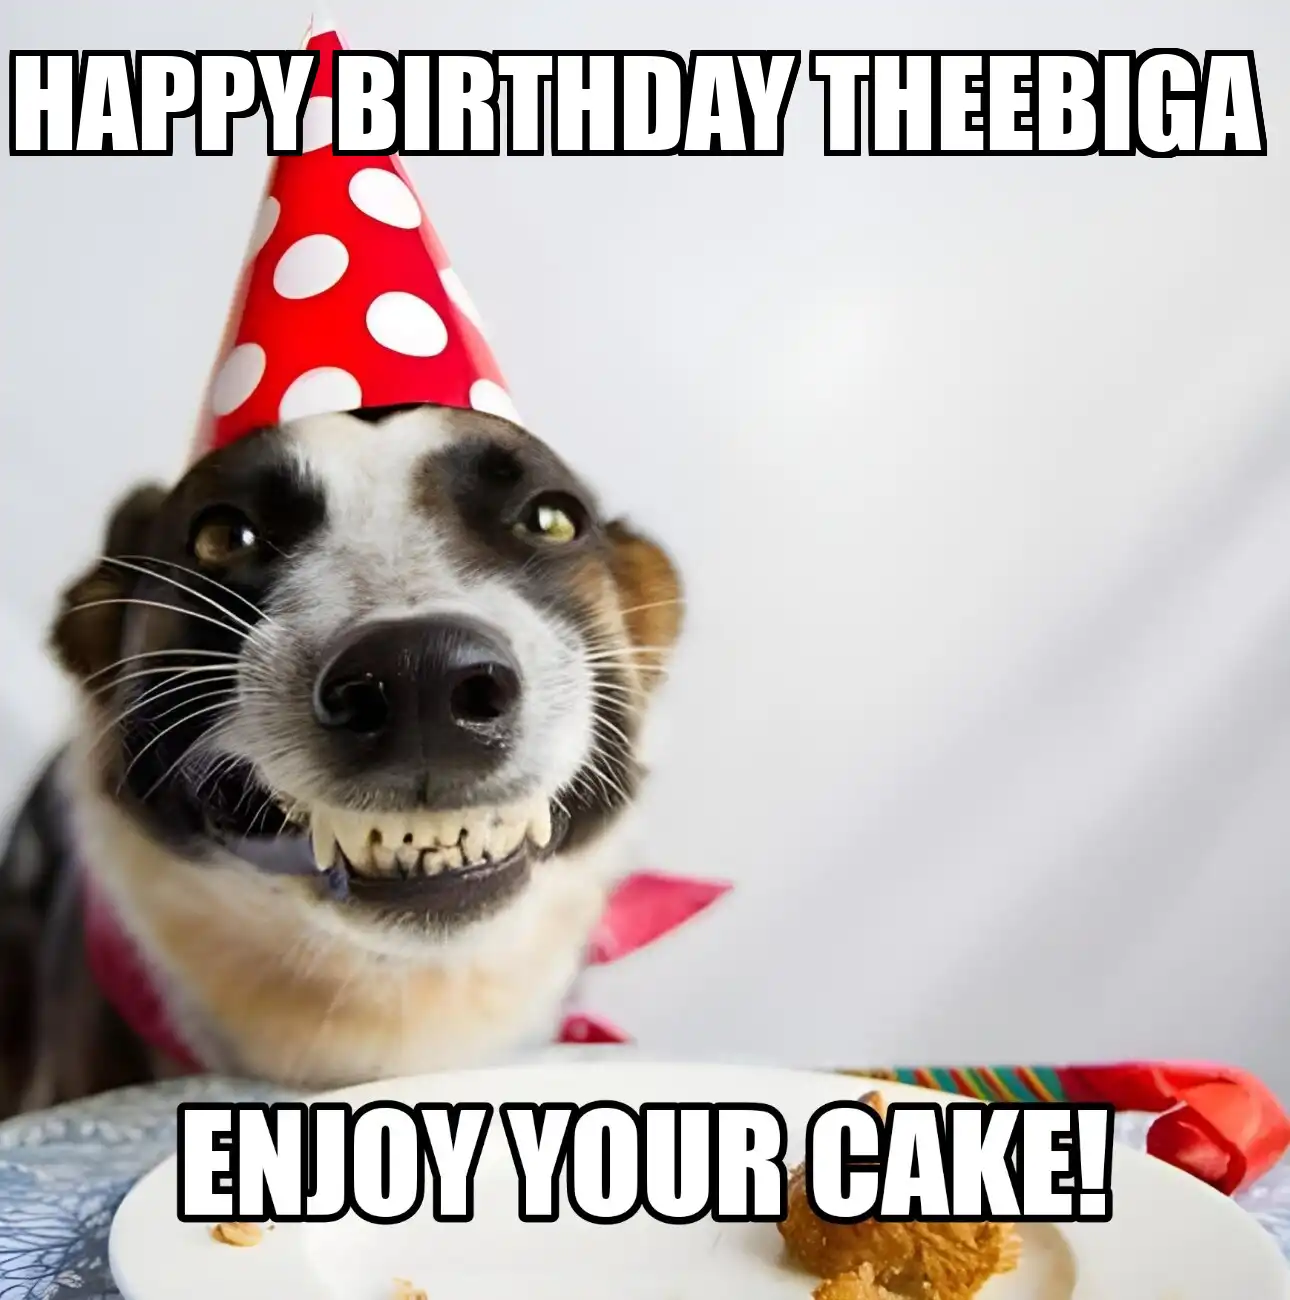 Happy Birthday Theebiga Enjoy Your Cake Dog Meme